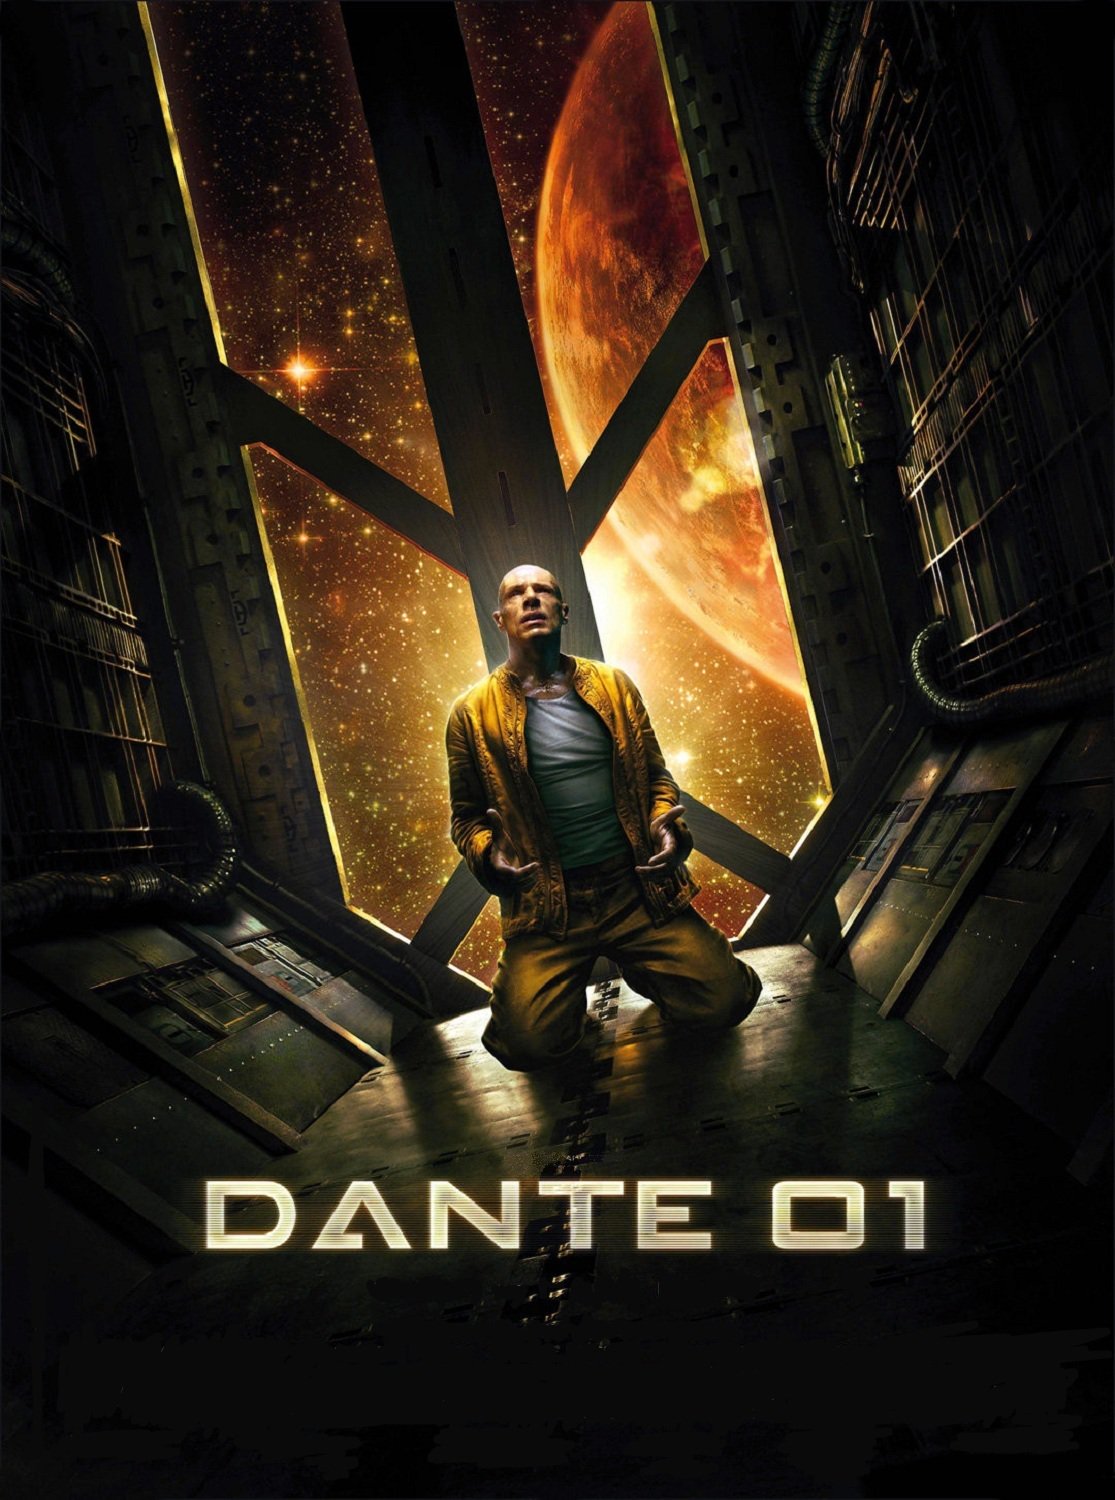 Plakat von "Dante 01"